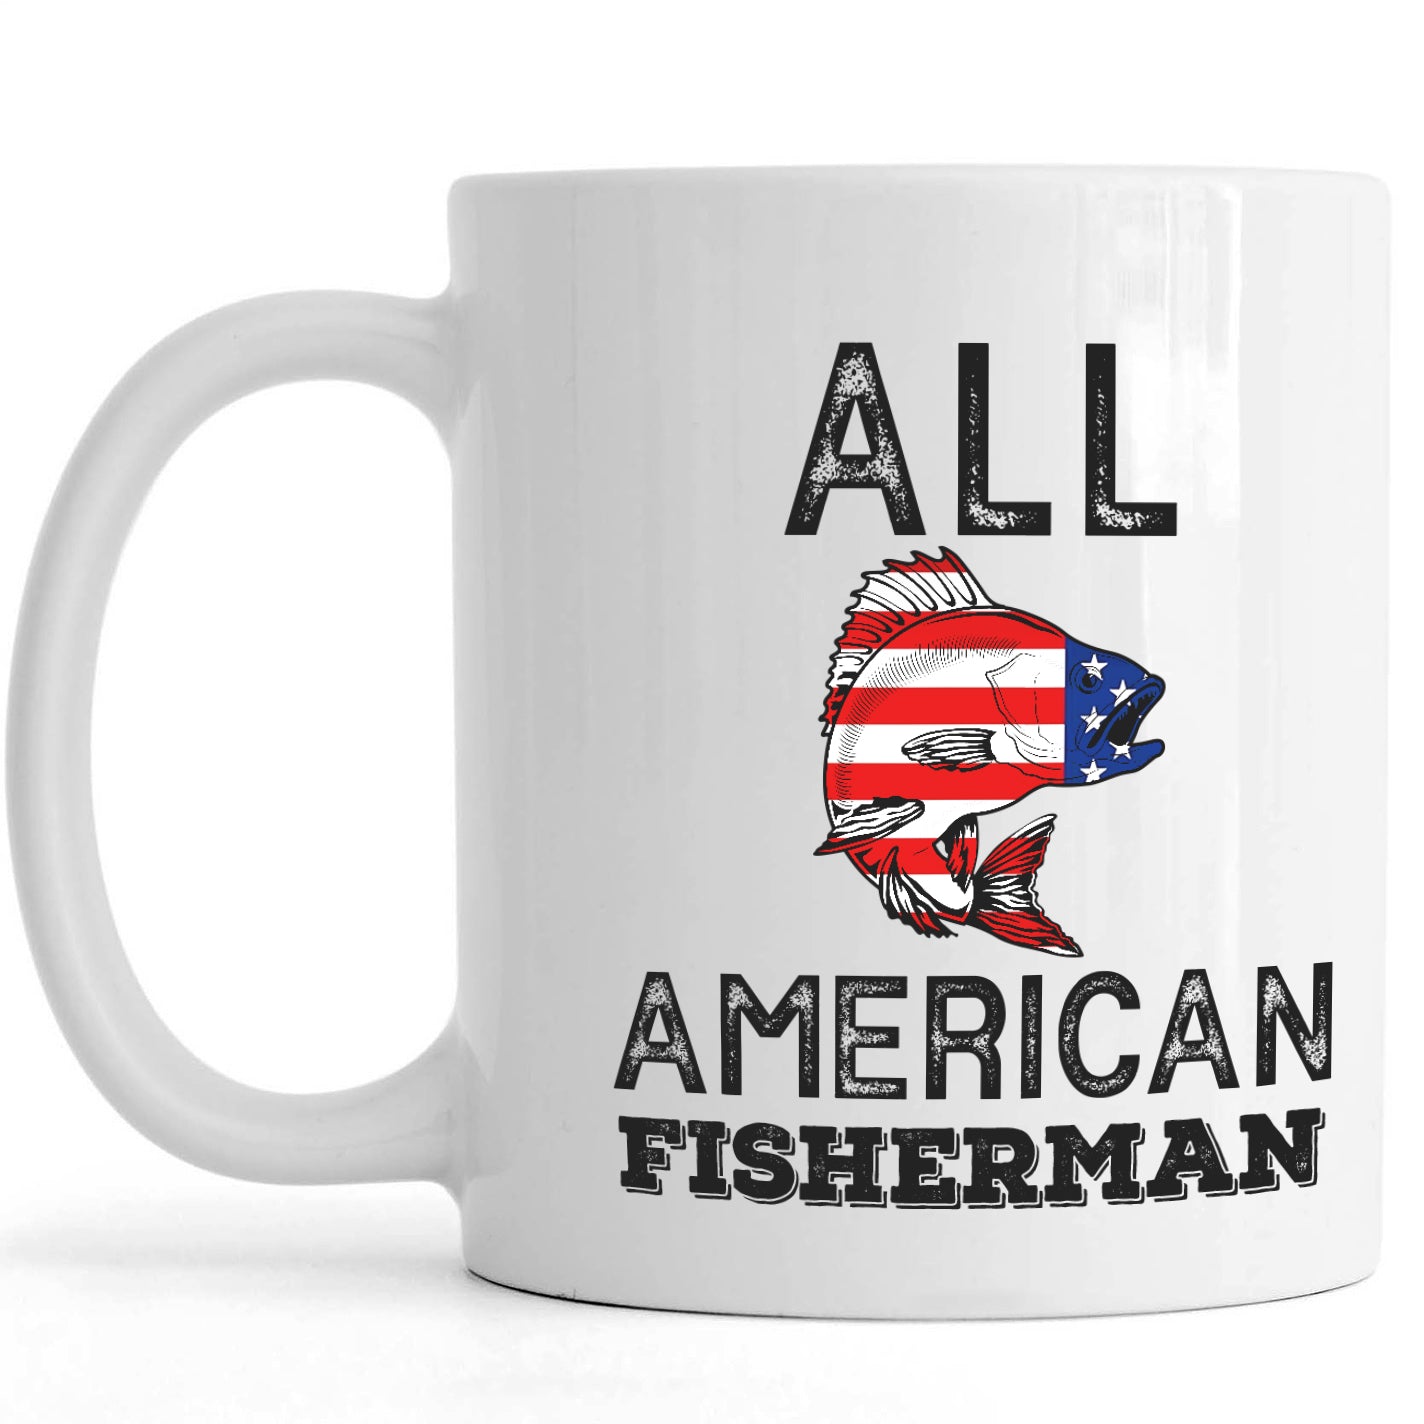 Independence Mug For Fisherman| All American For Fisherman Mug| Funny 4Th Of July Mug| Patriotic Mug For Fishing Lover| Cool Coffee Mug For Independence Day, Forth Of July Mug| Jmn663